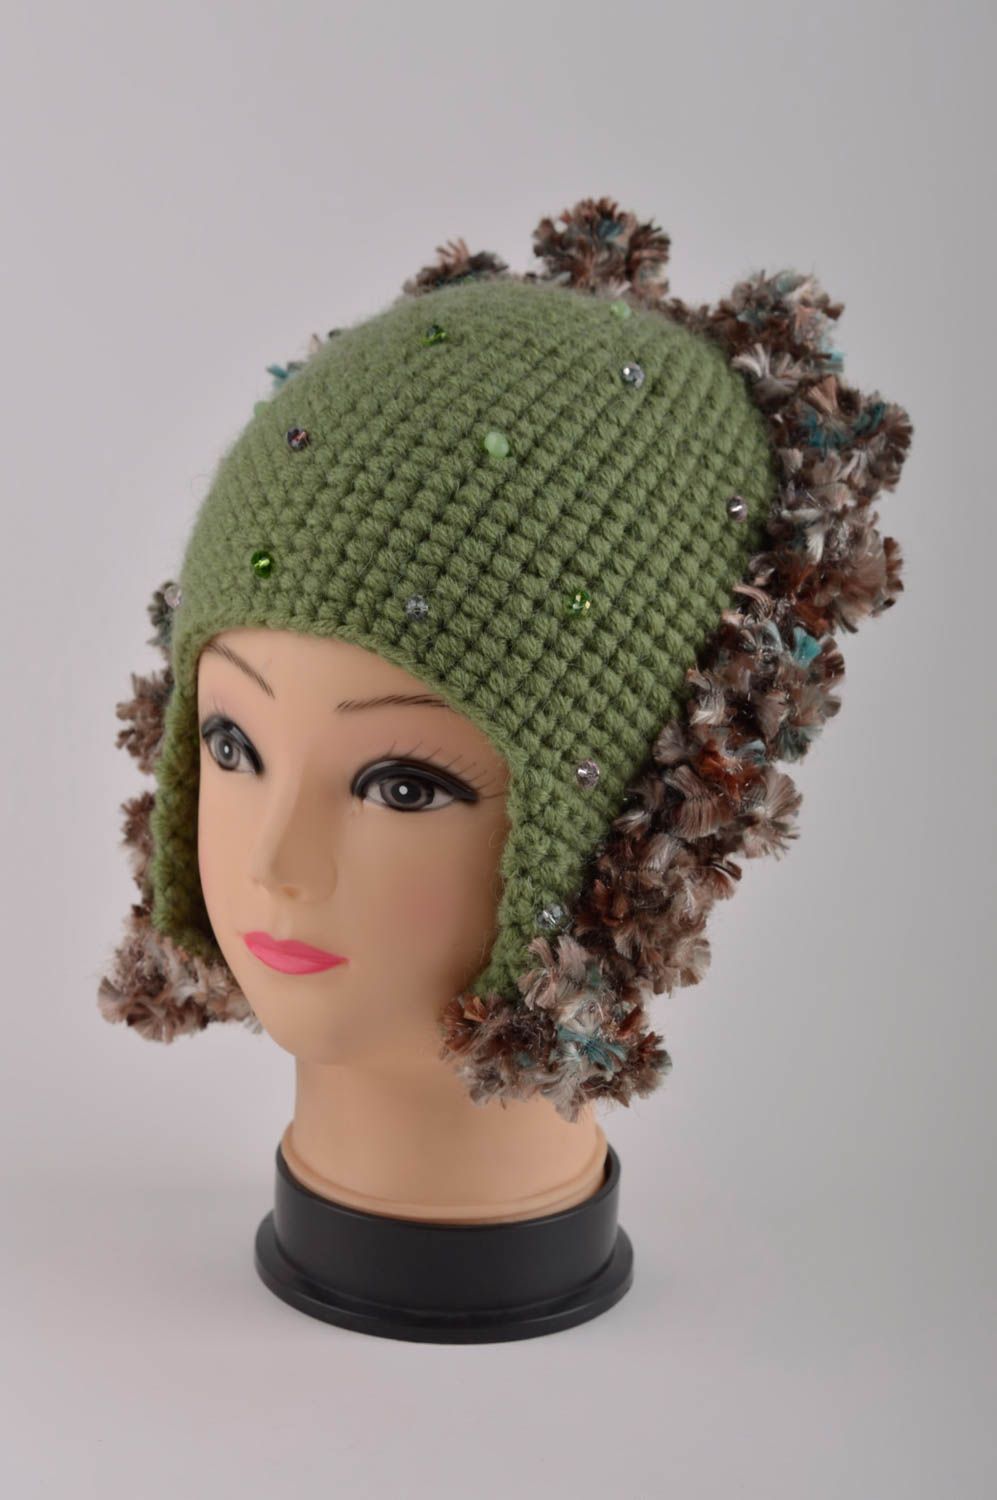 Handmade hat designer hat for girls funny hat gift ideas handmade headwear photo 2